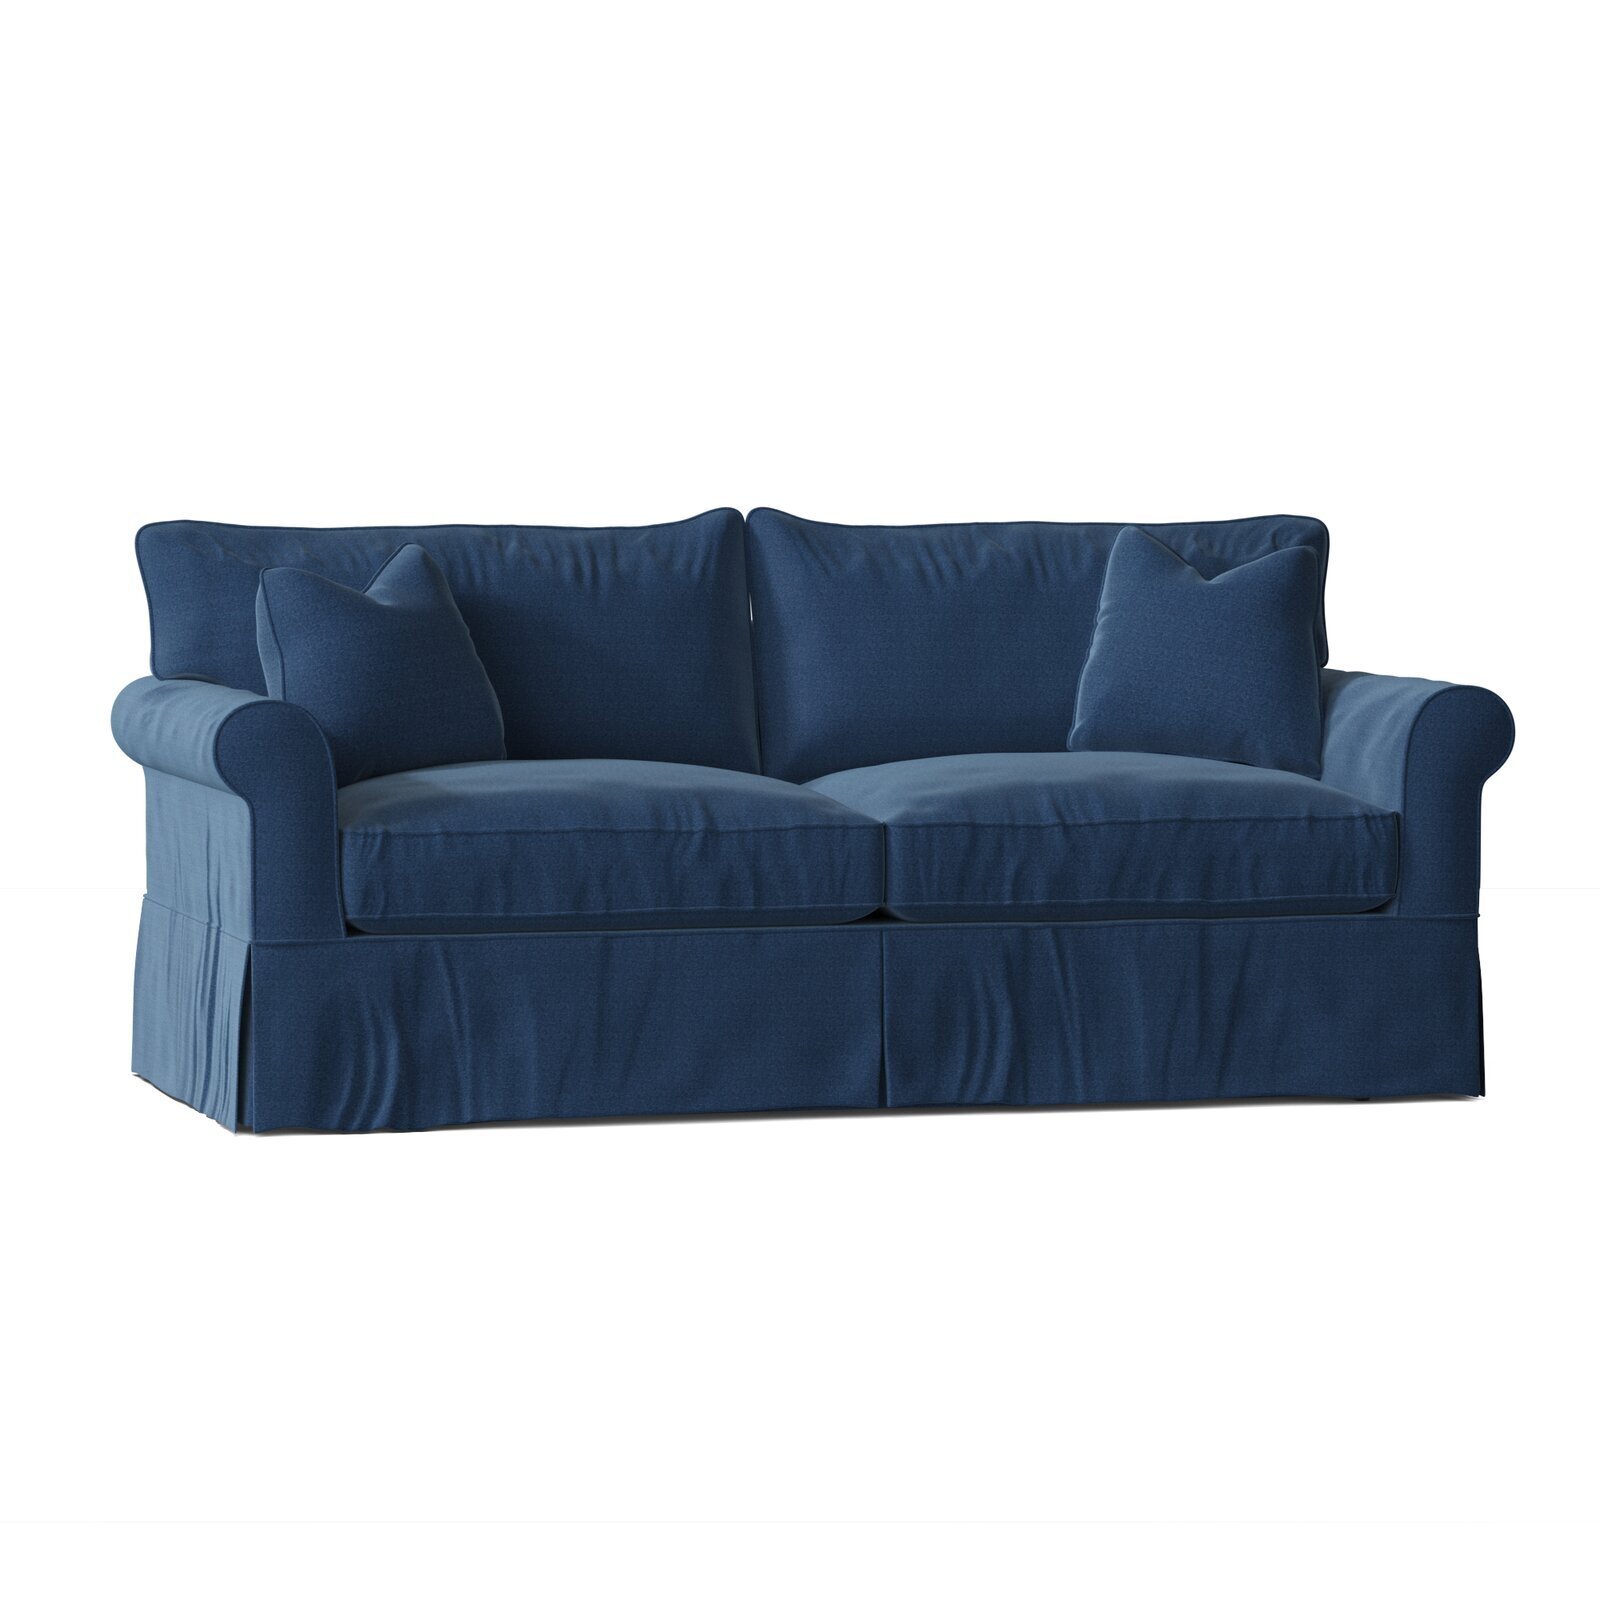 Amazon.com: 2 Piece Cotton Washed Heavy Denim Sofa Slipcover, Blue : Home &  Kitchen